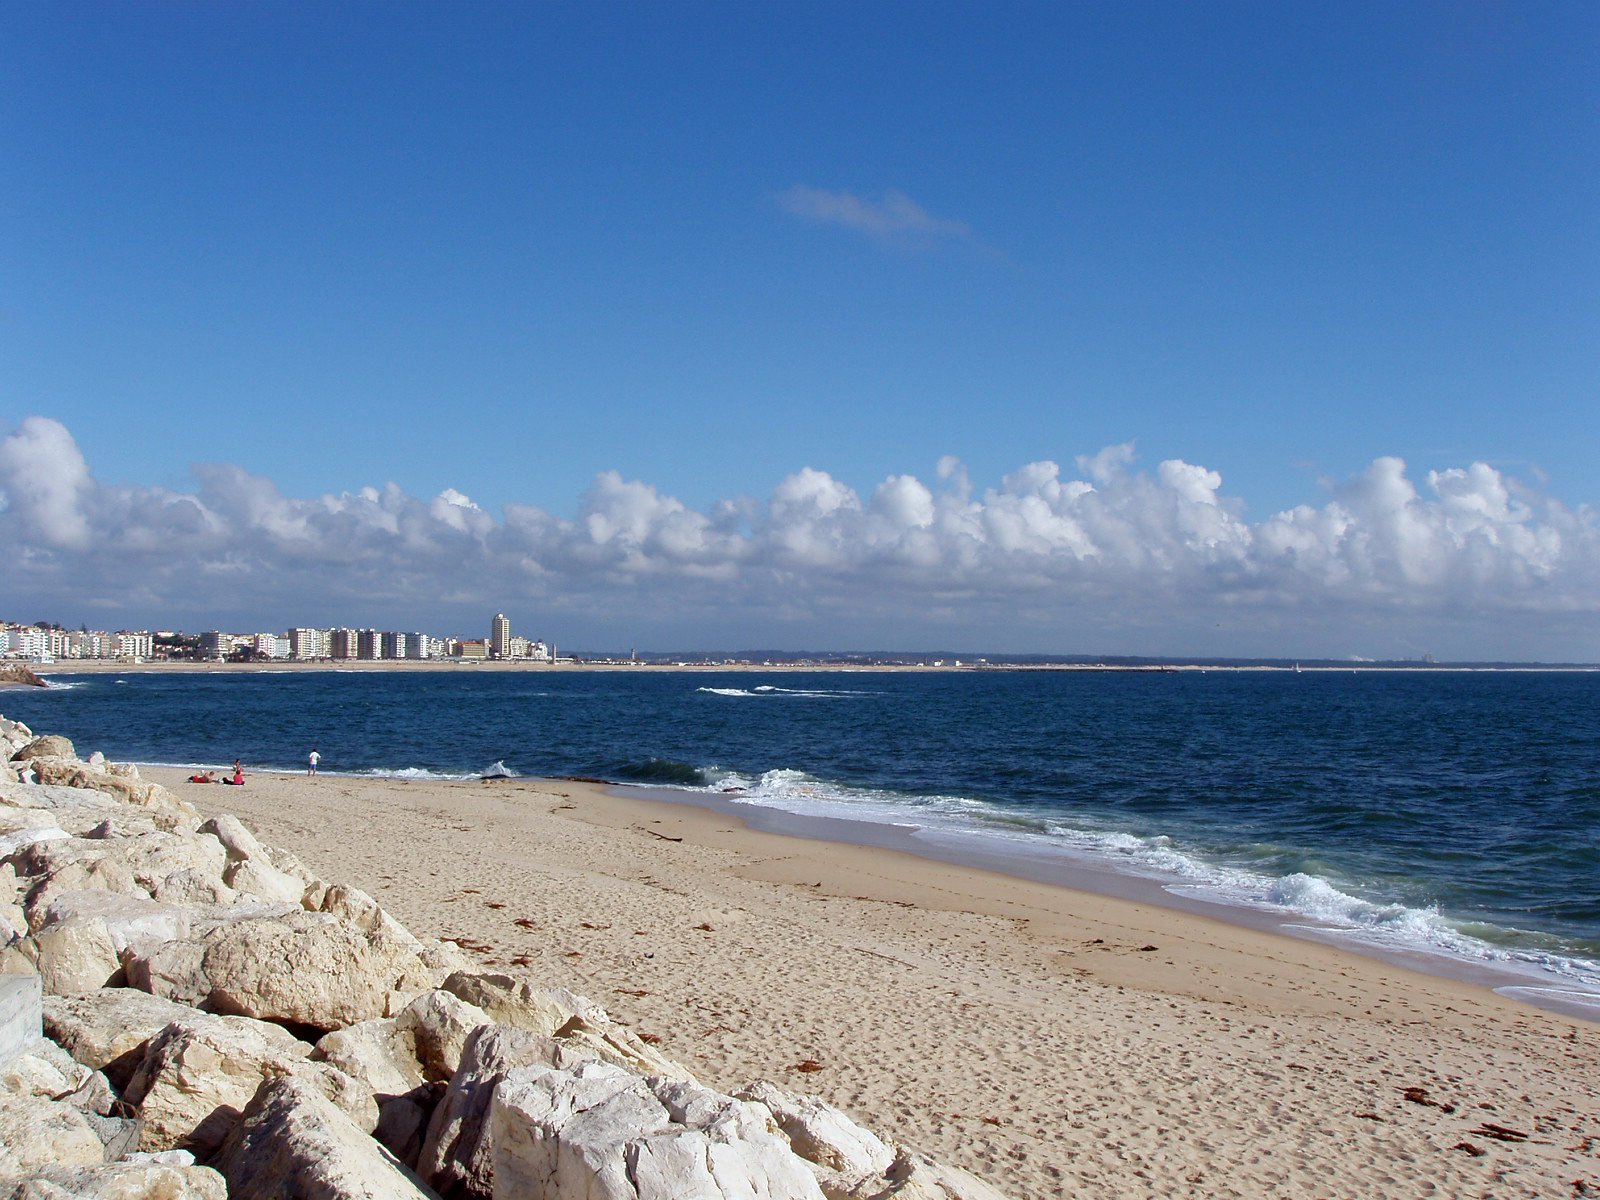 a sandy beach and city skyline under a bright blue sky